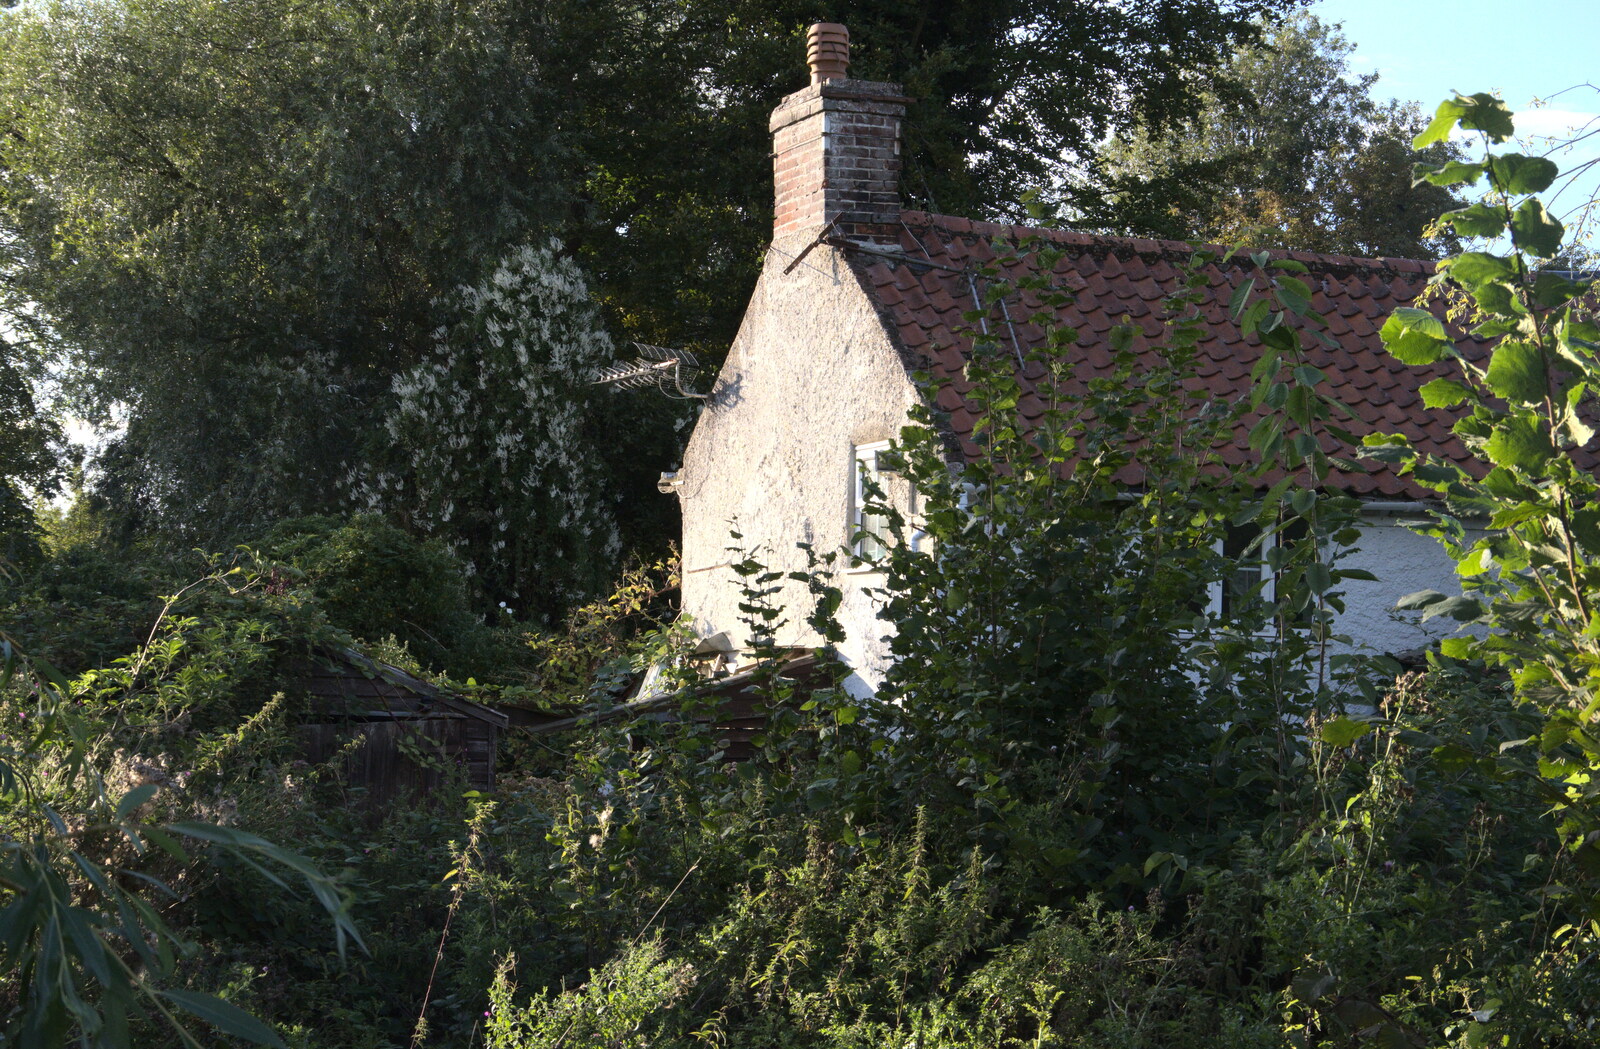 Camping at Three Rivers, Geldeston, Norfolk - 5th September 2020: A derelict cottage